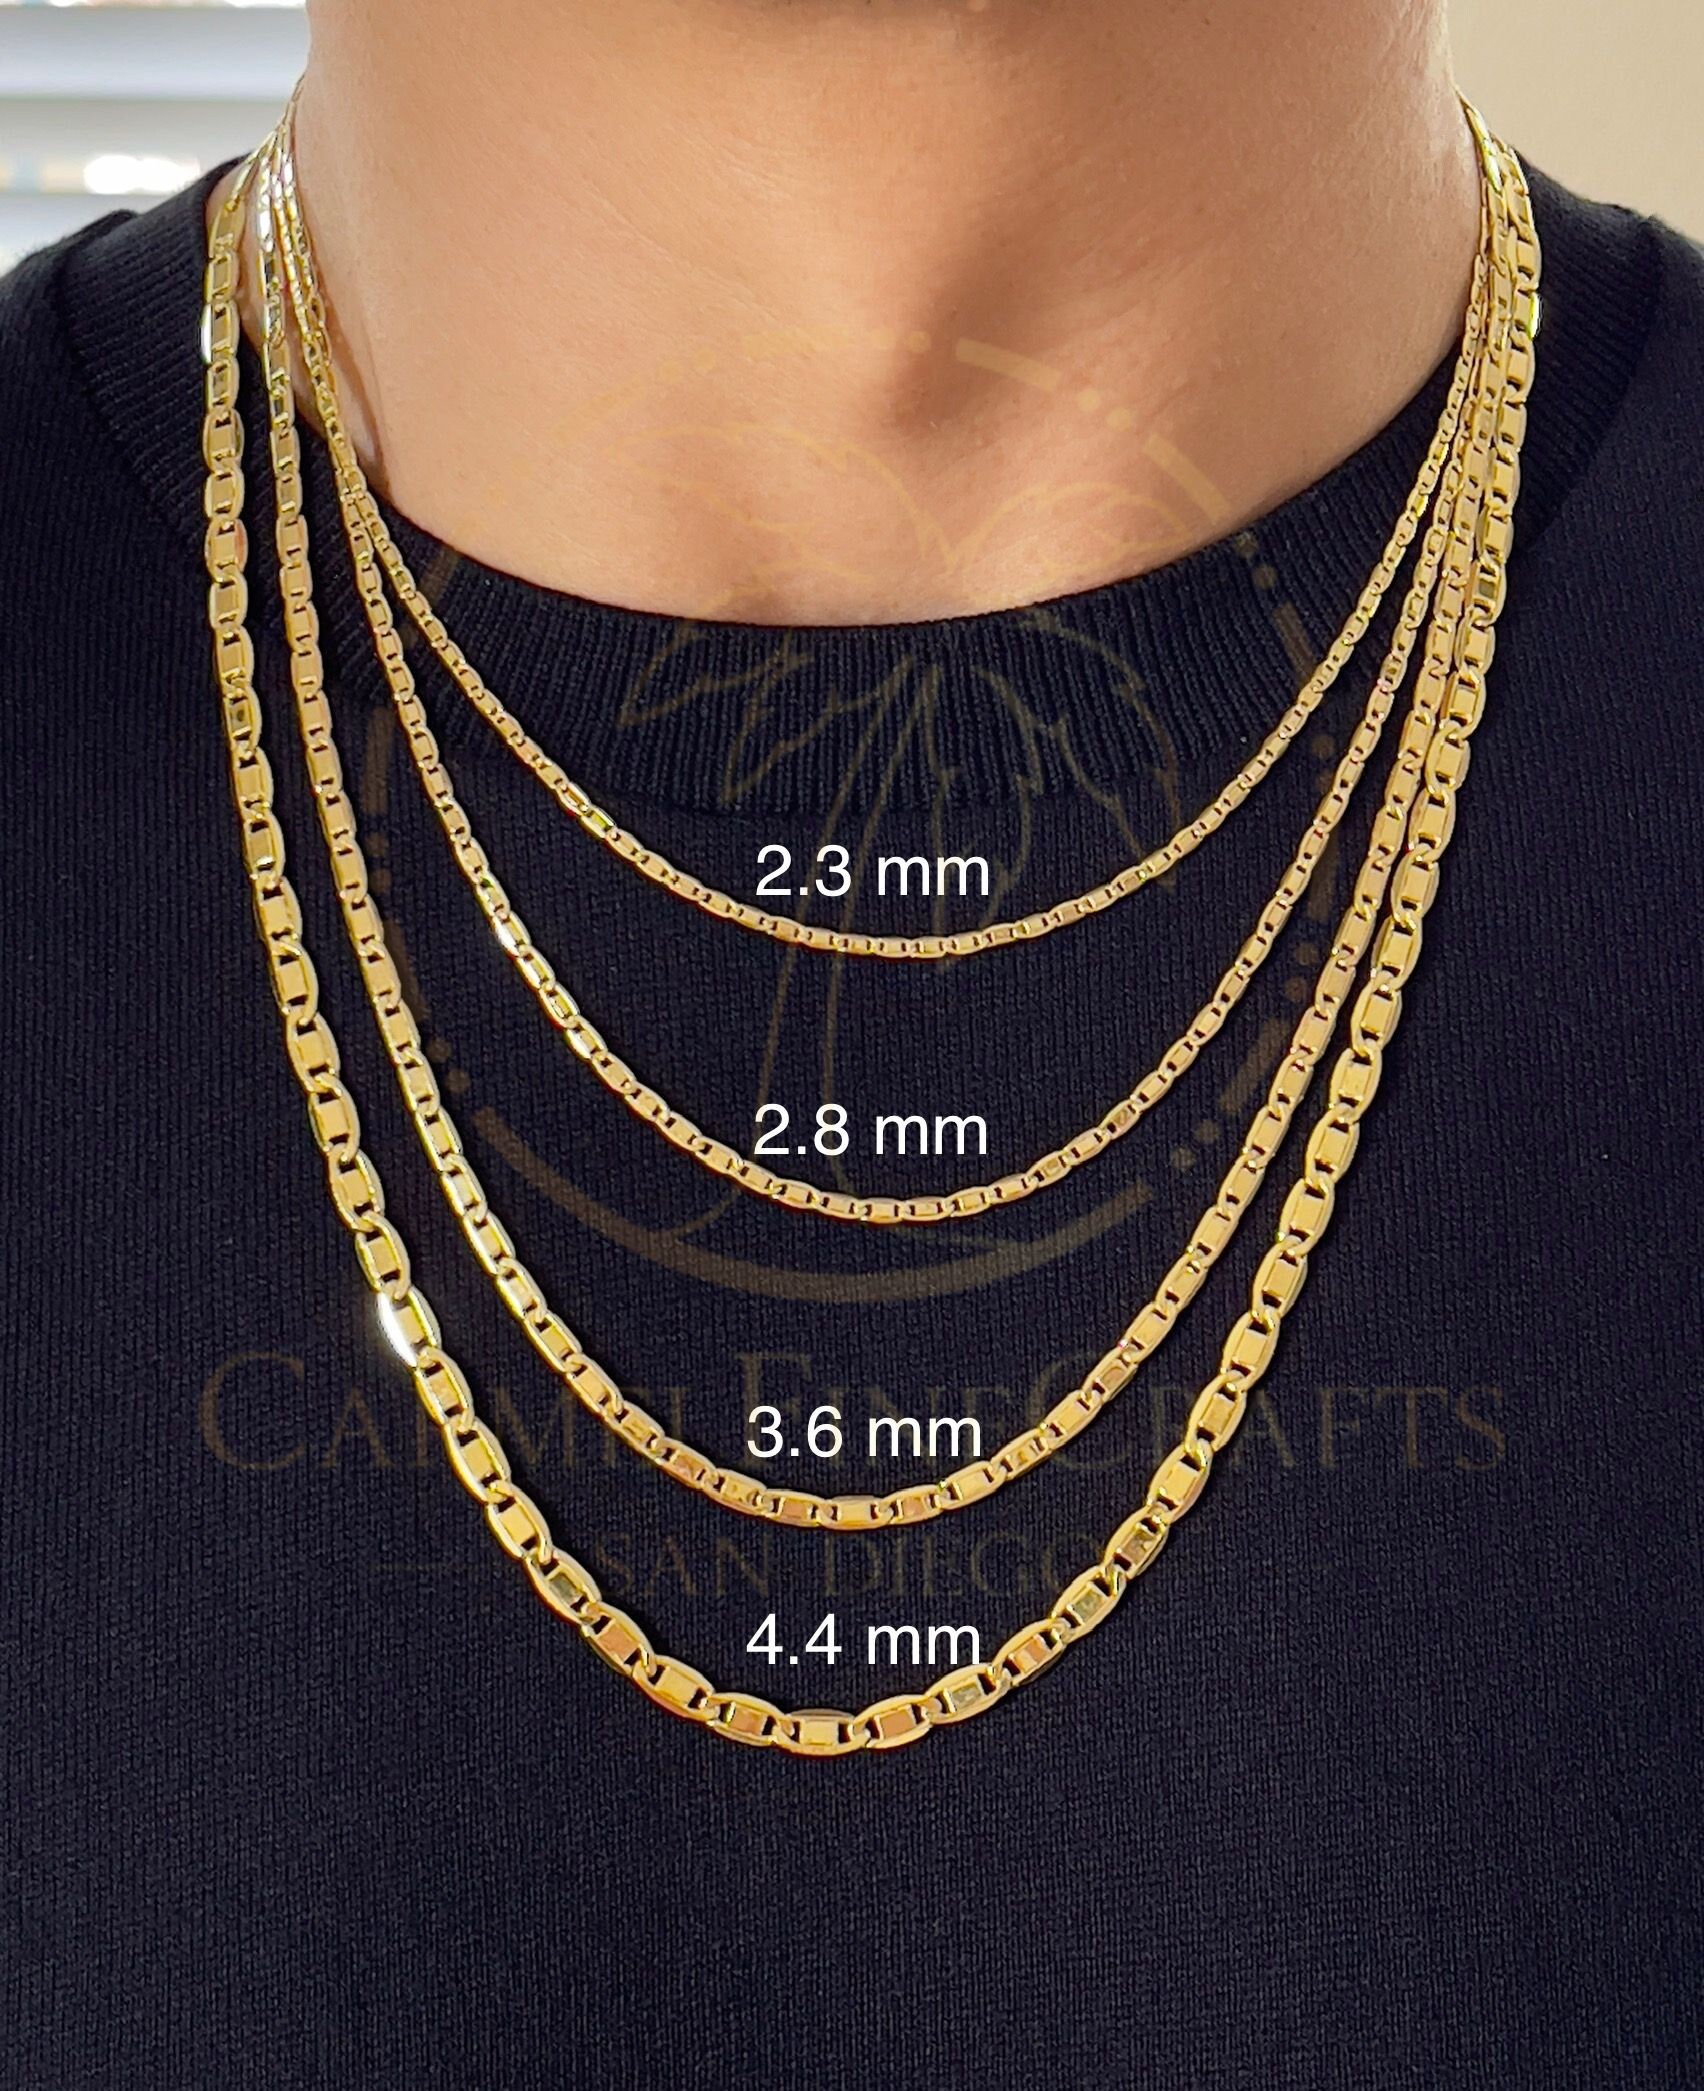 Men's 4.4mm Diamond-Cut Glitter Rope Chain Necklace in 10K Gold - 24